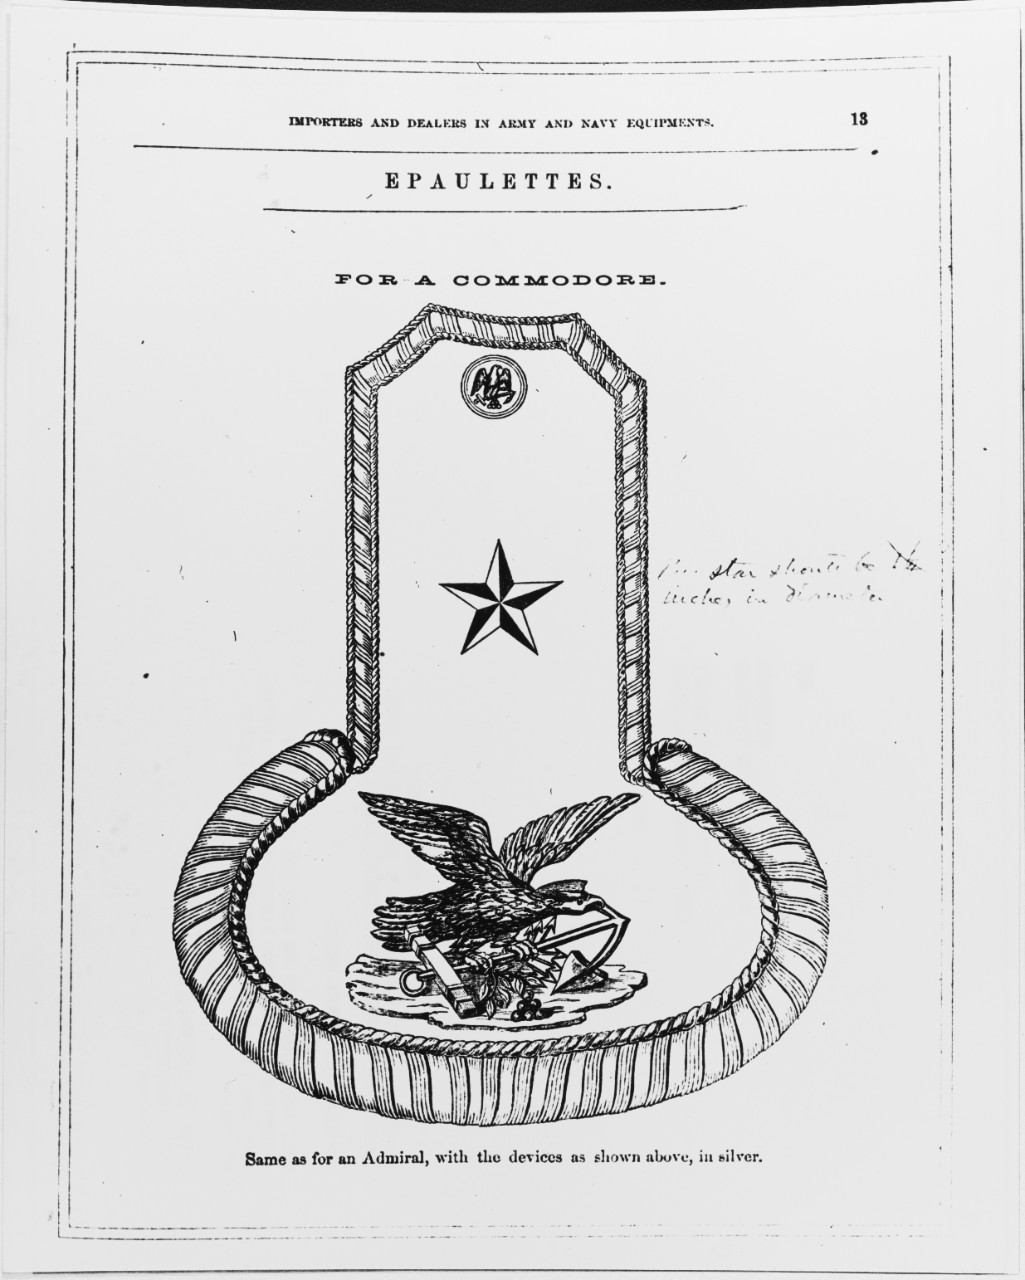 Uniform Regulations, 1862. Epaulets for a Commodore